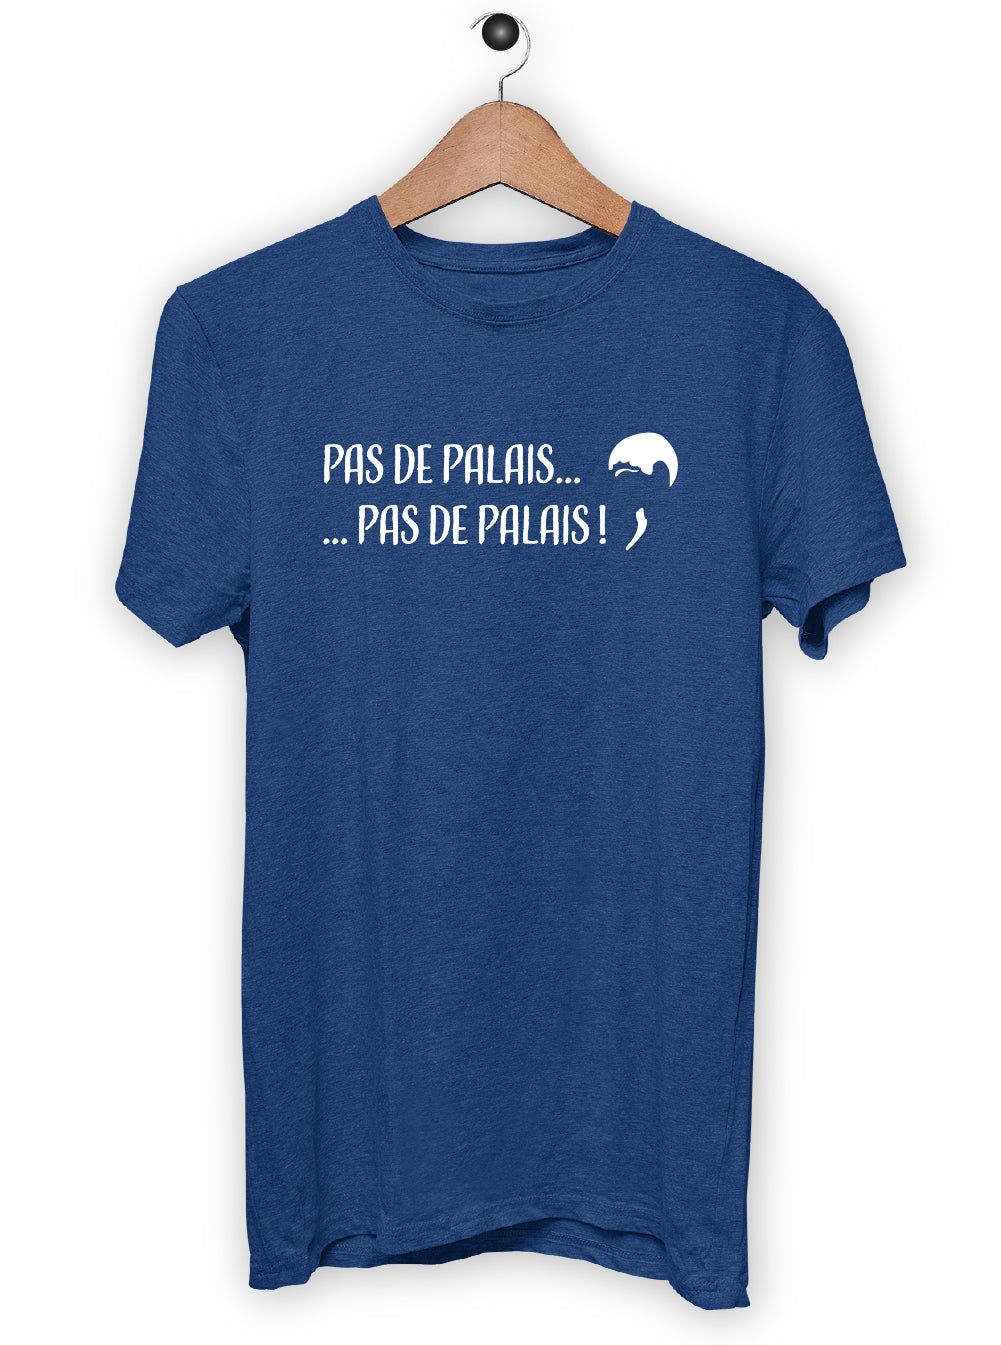 T-Shirt "PAS DE PALAIS ... PAS DE PALAIS"